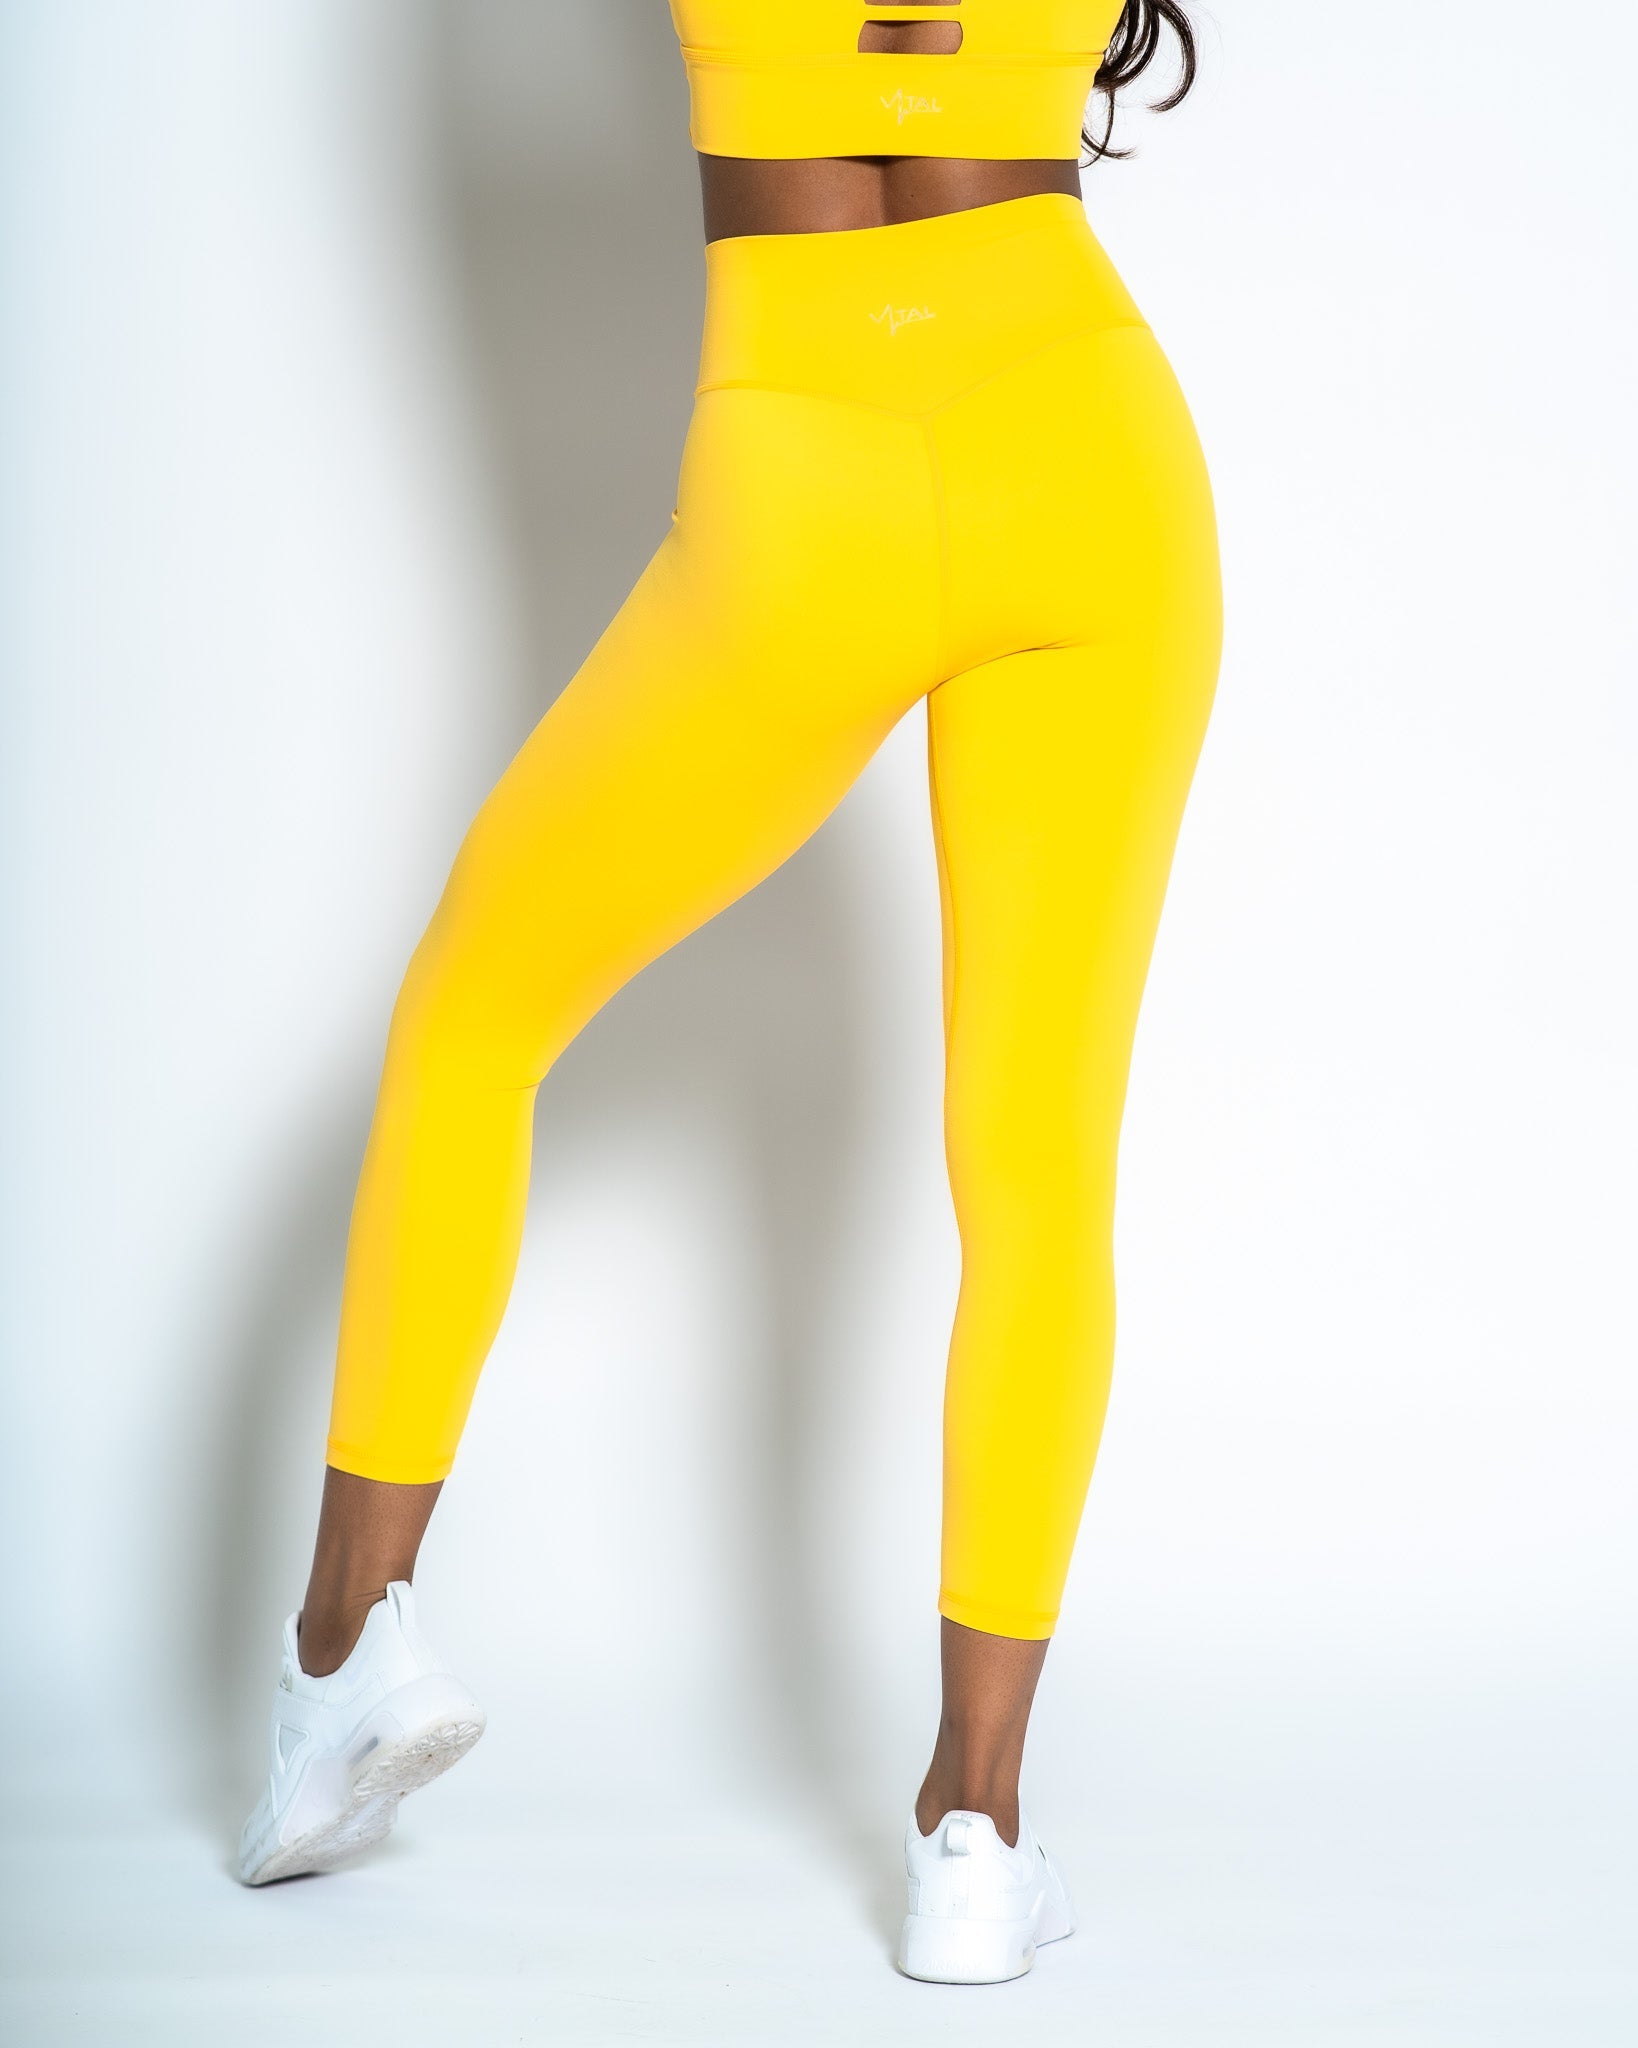 Ethos yellow neon highwaisted leggings w pockets - $15 - From